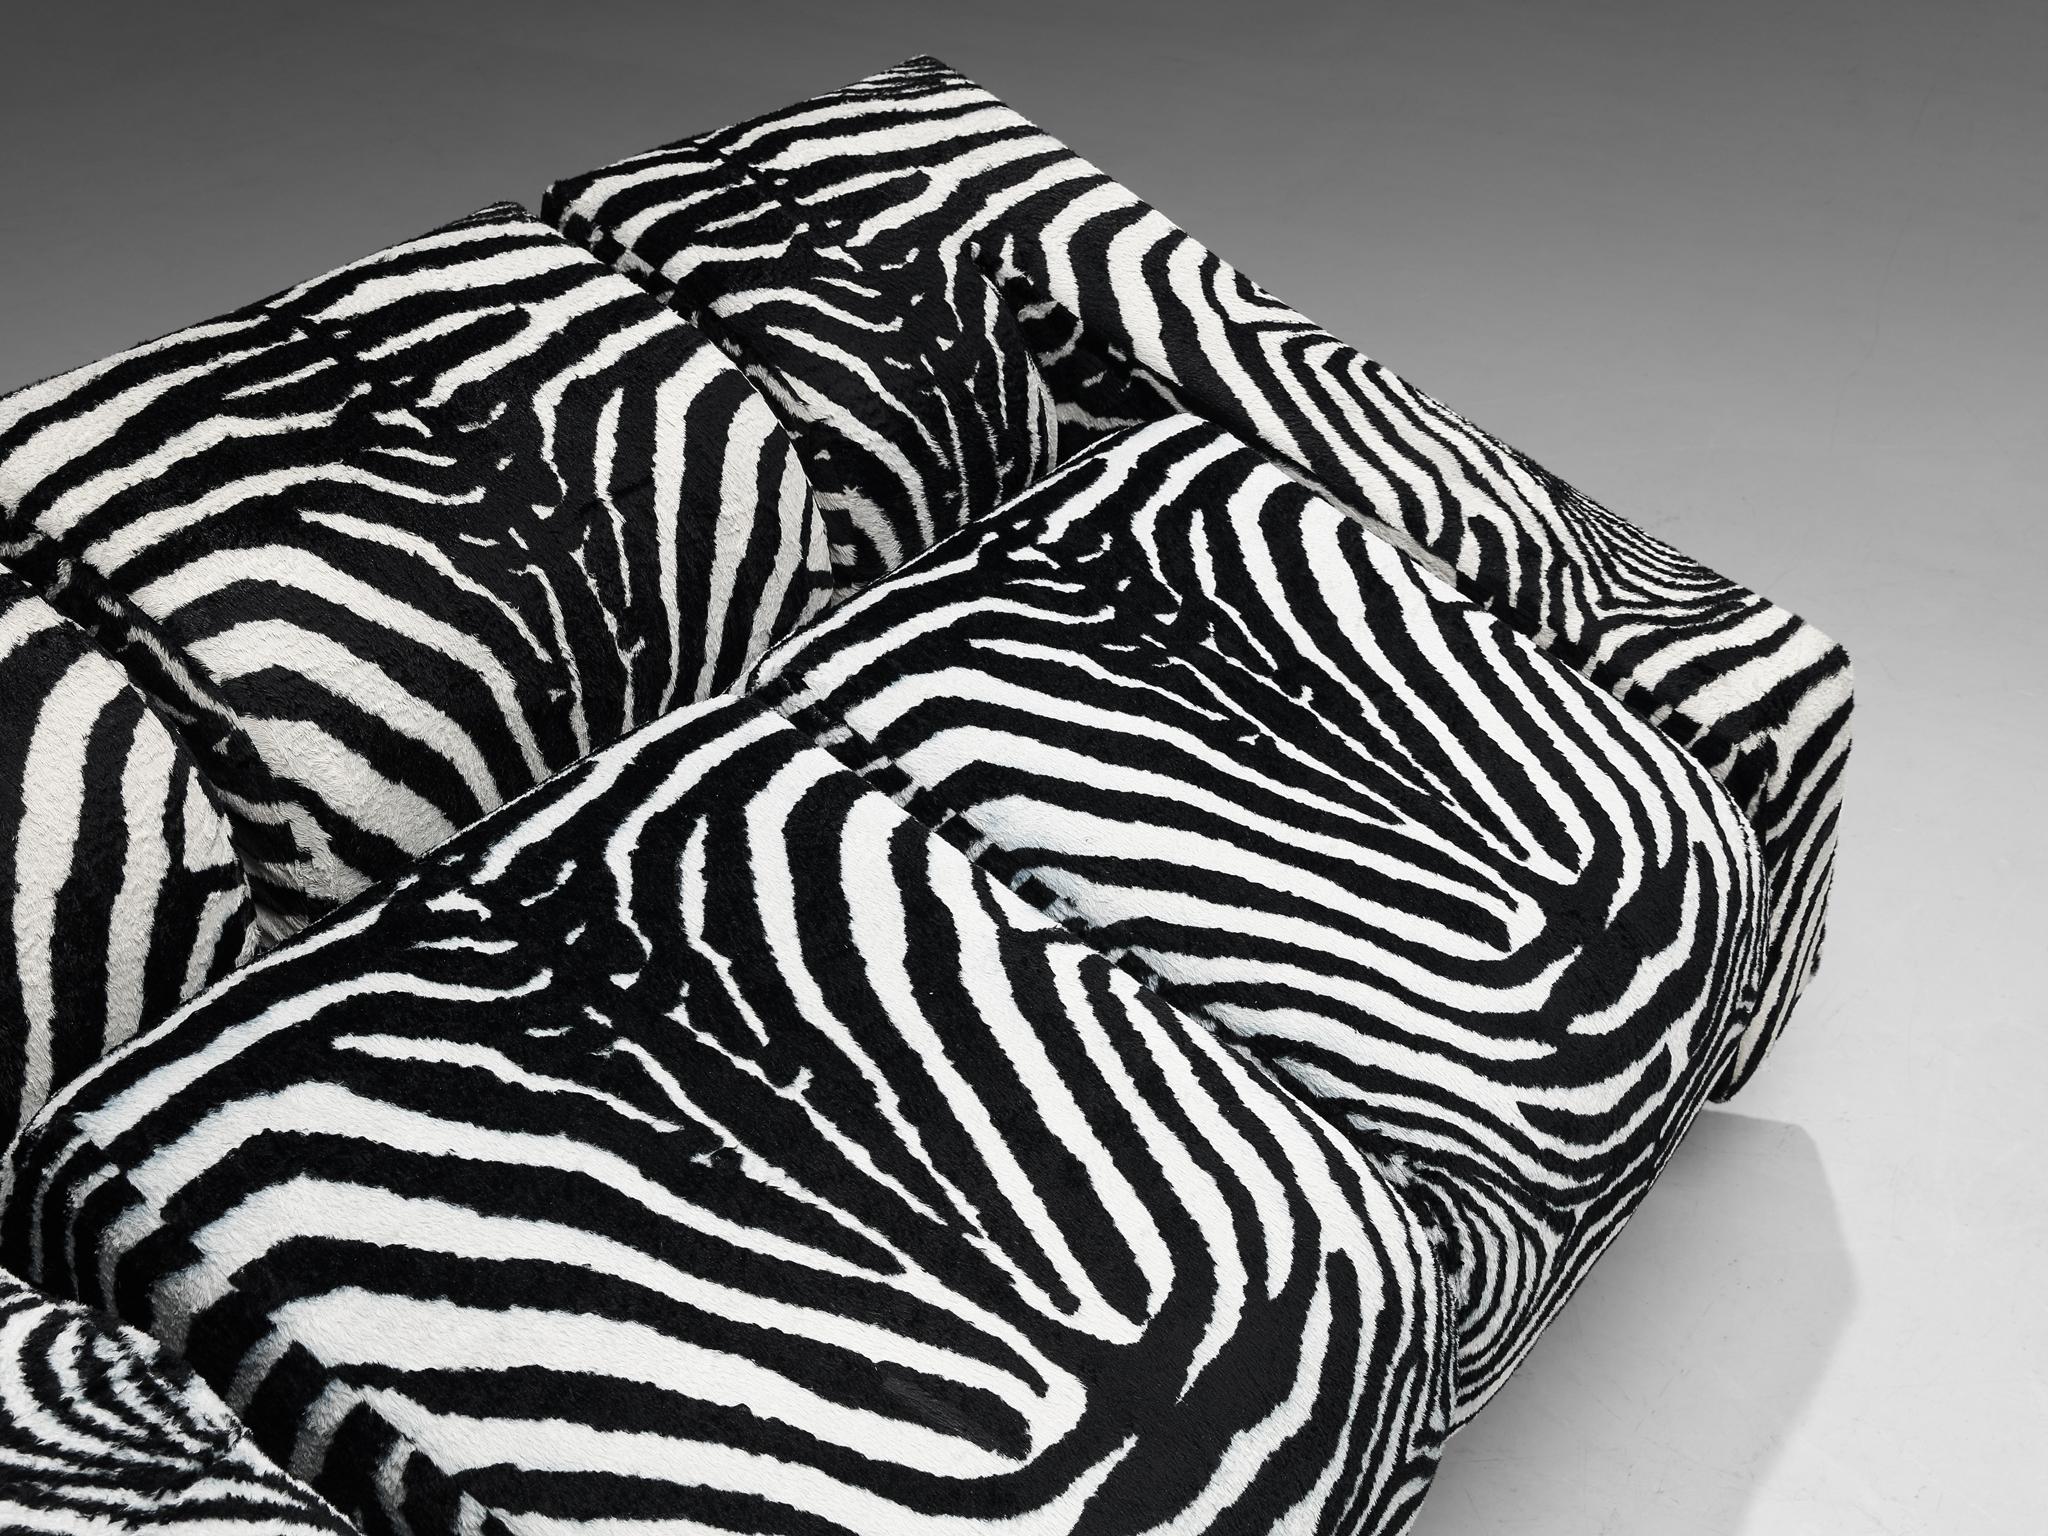 Late 20th Century Mario Botta for Alias 'Obliqua' Sofa in Zebra Print Upholstery For Sale